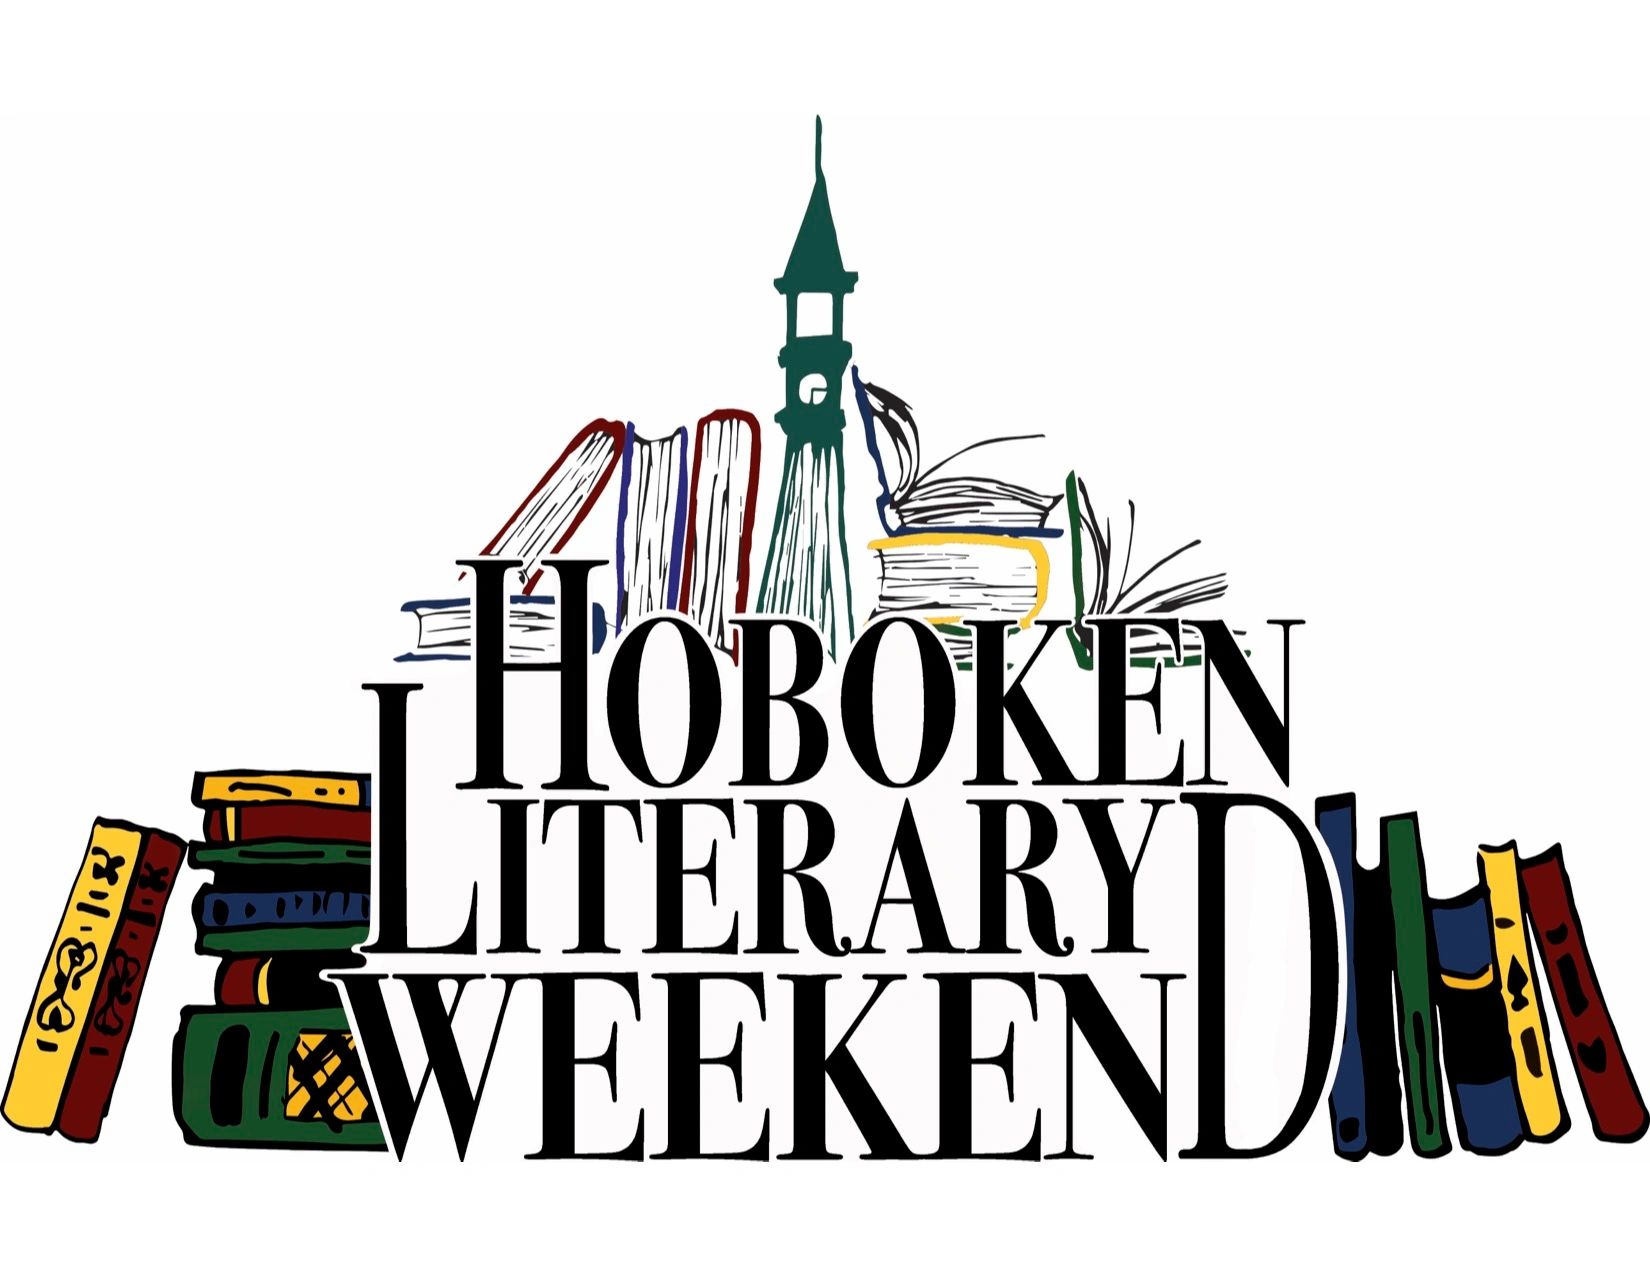 Hoboken Literary Weekend March 31-April 2